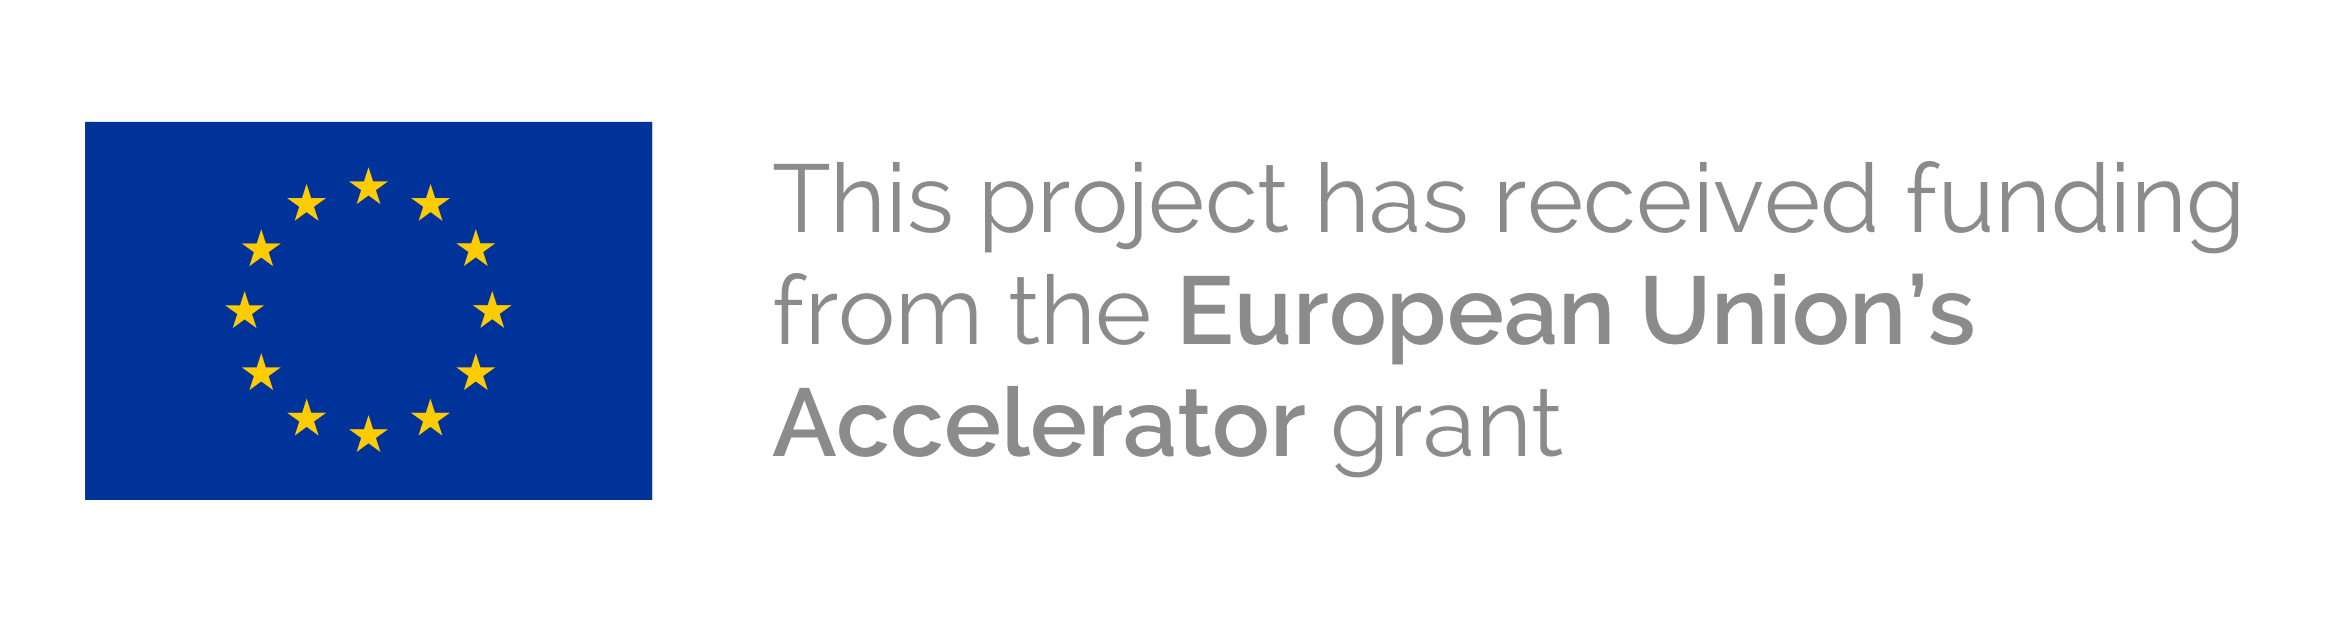 EU Accelerator Grant